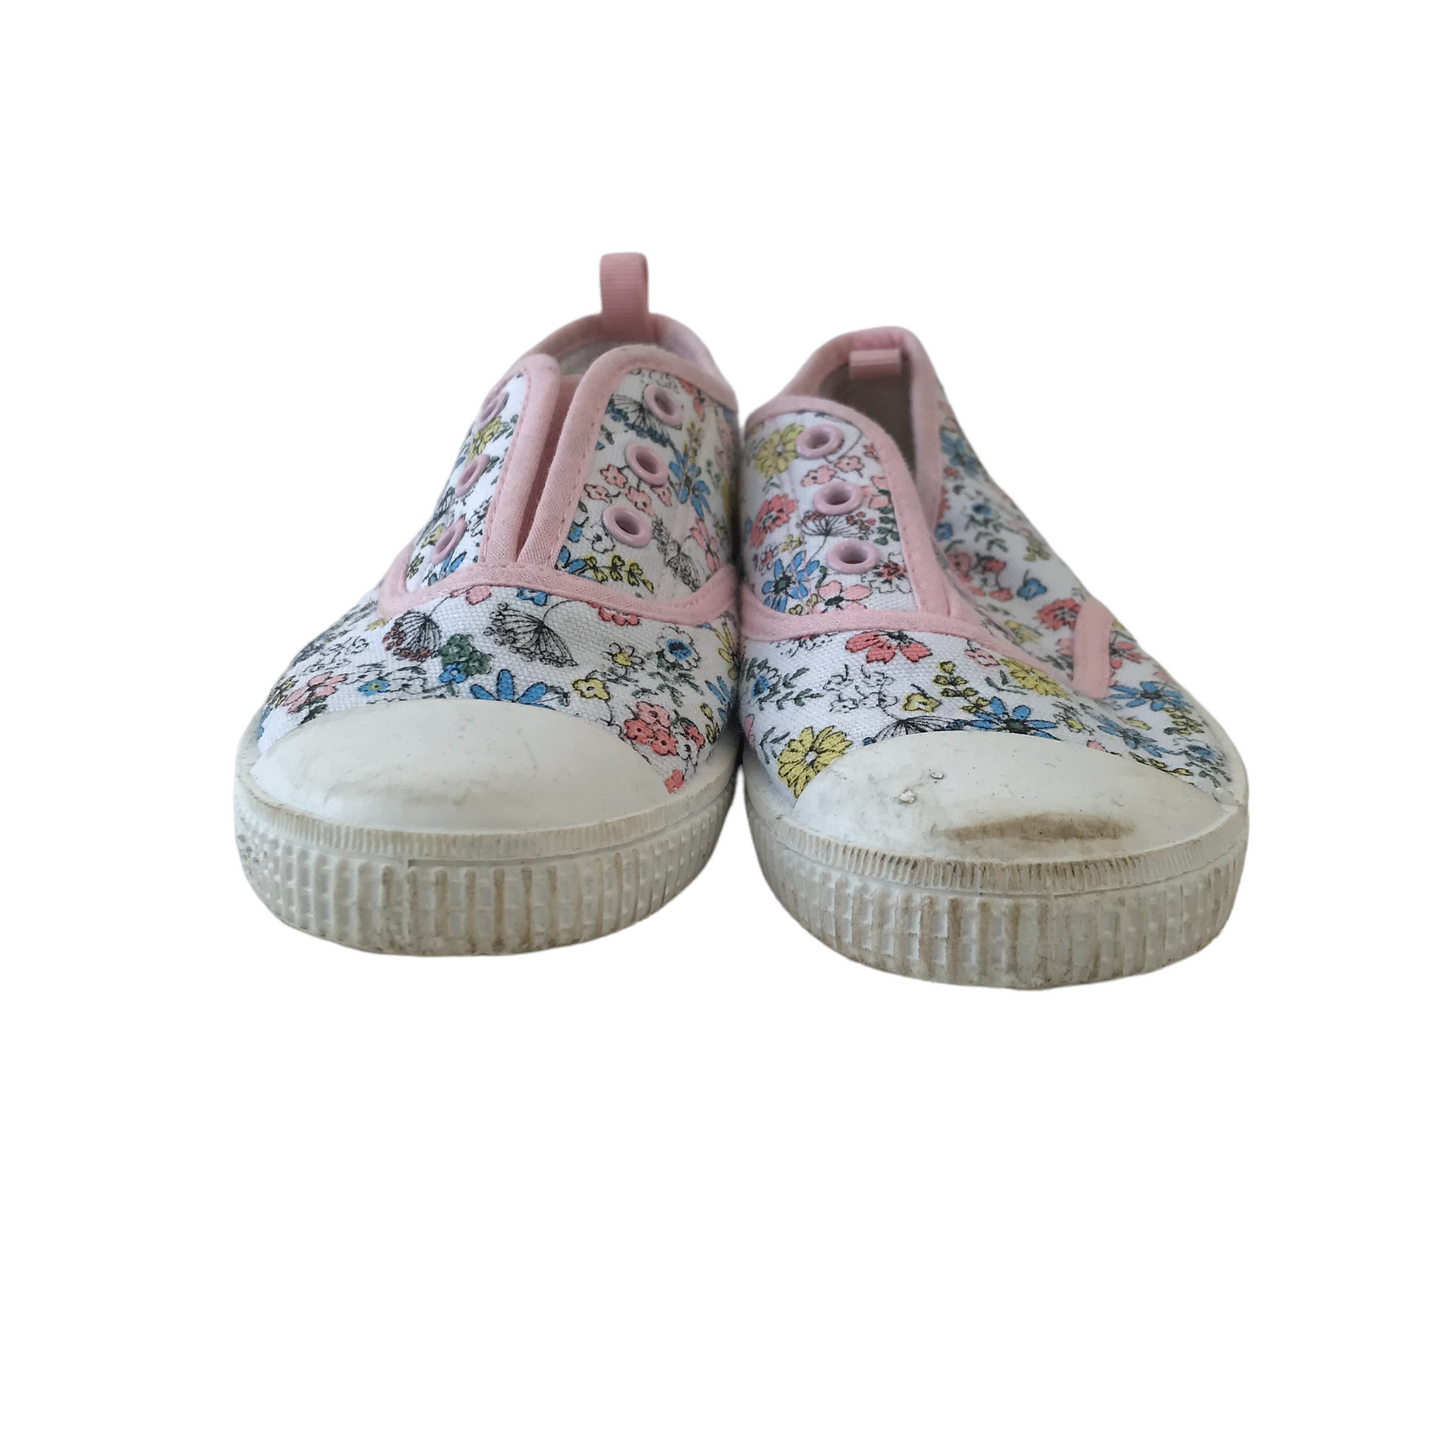 Primark Floral Plimsoll-style Trainers Shoe Size 11 (jr)